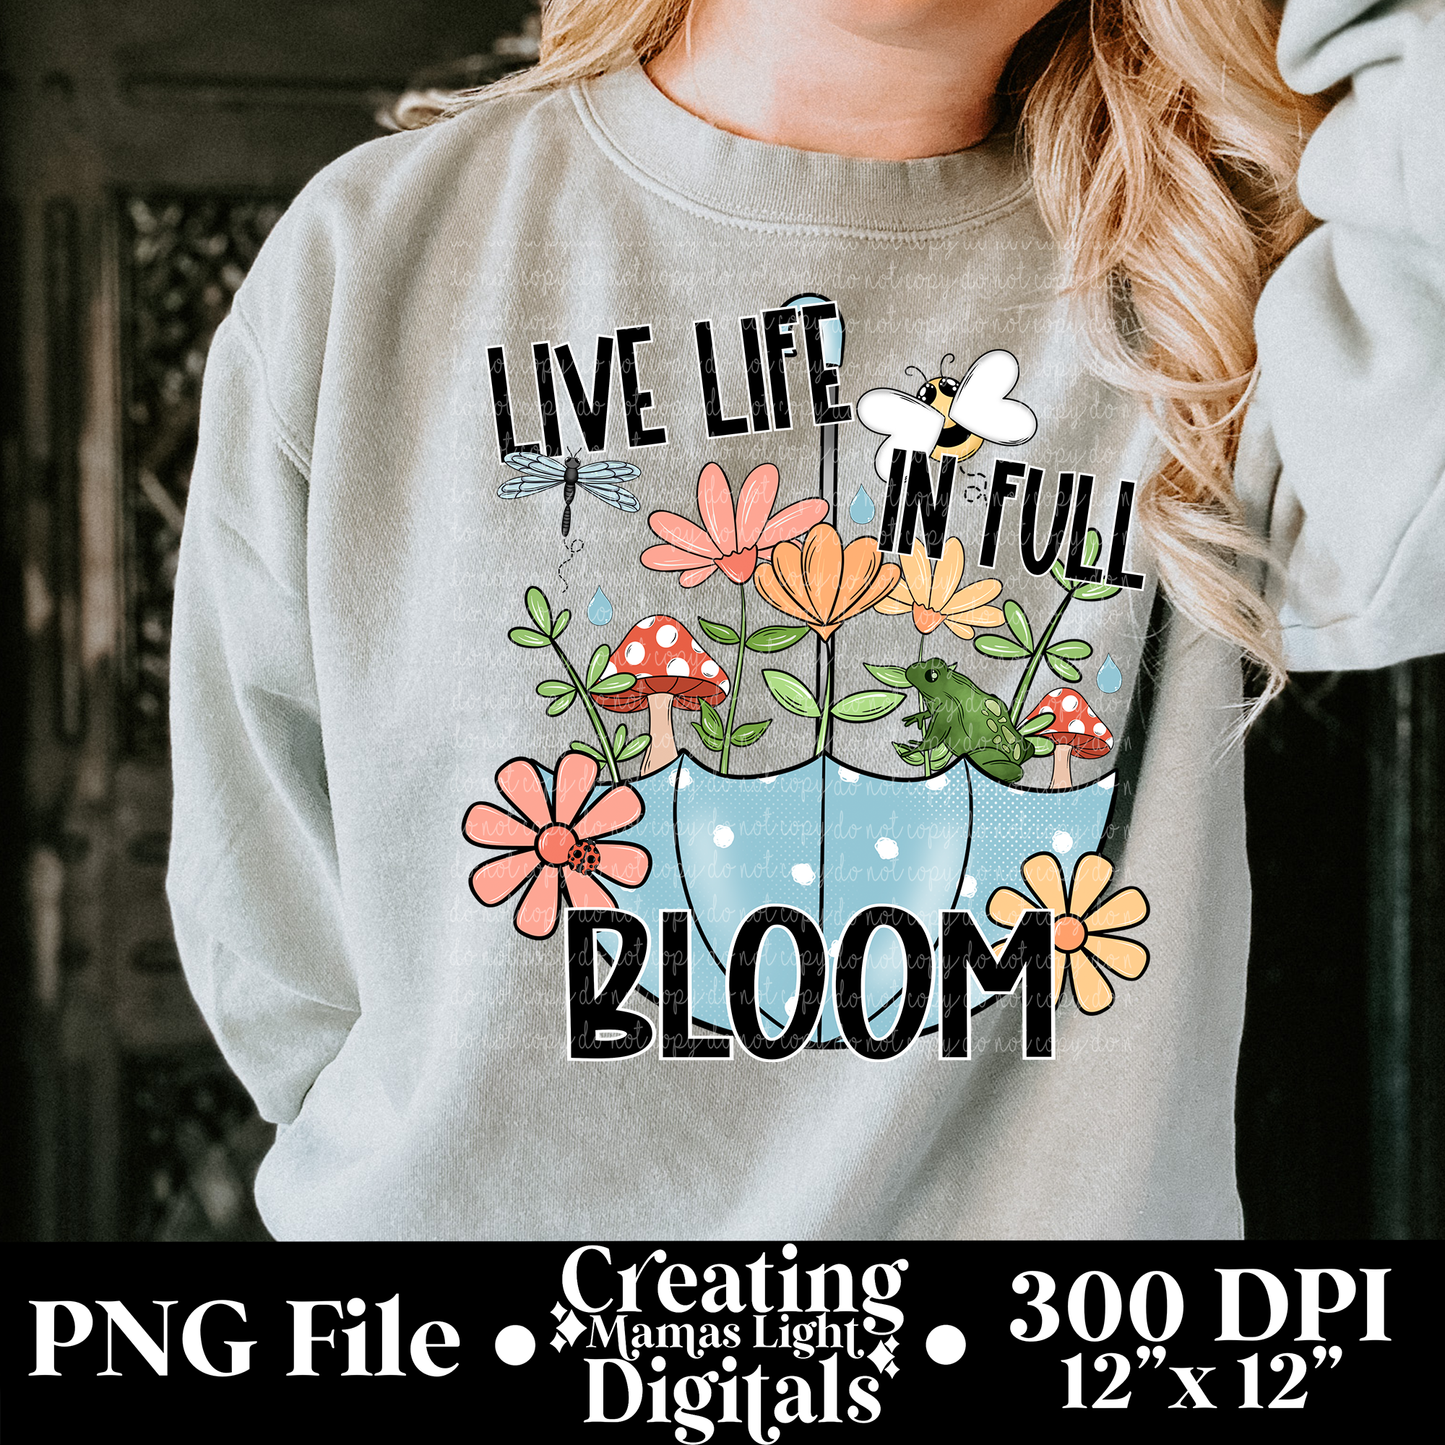 Live Life in Full Bloom